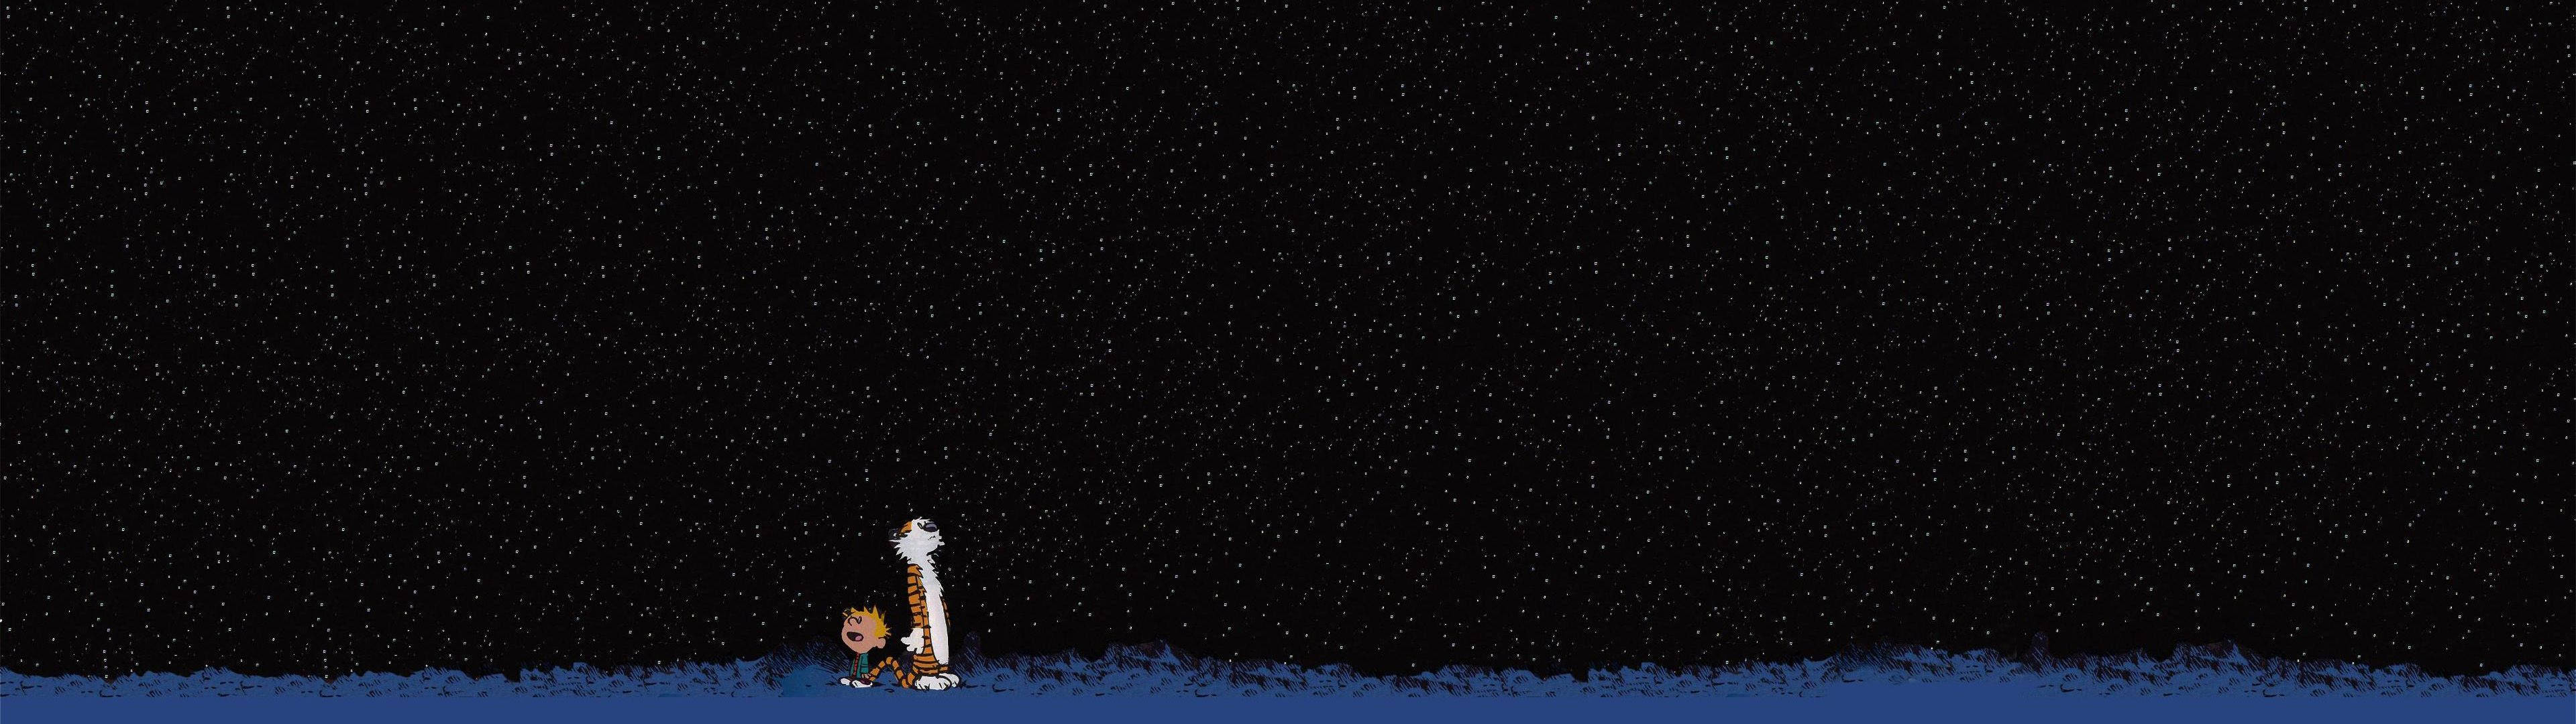 Calvin And Hobbes Million Stars Background